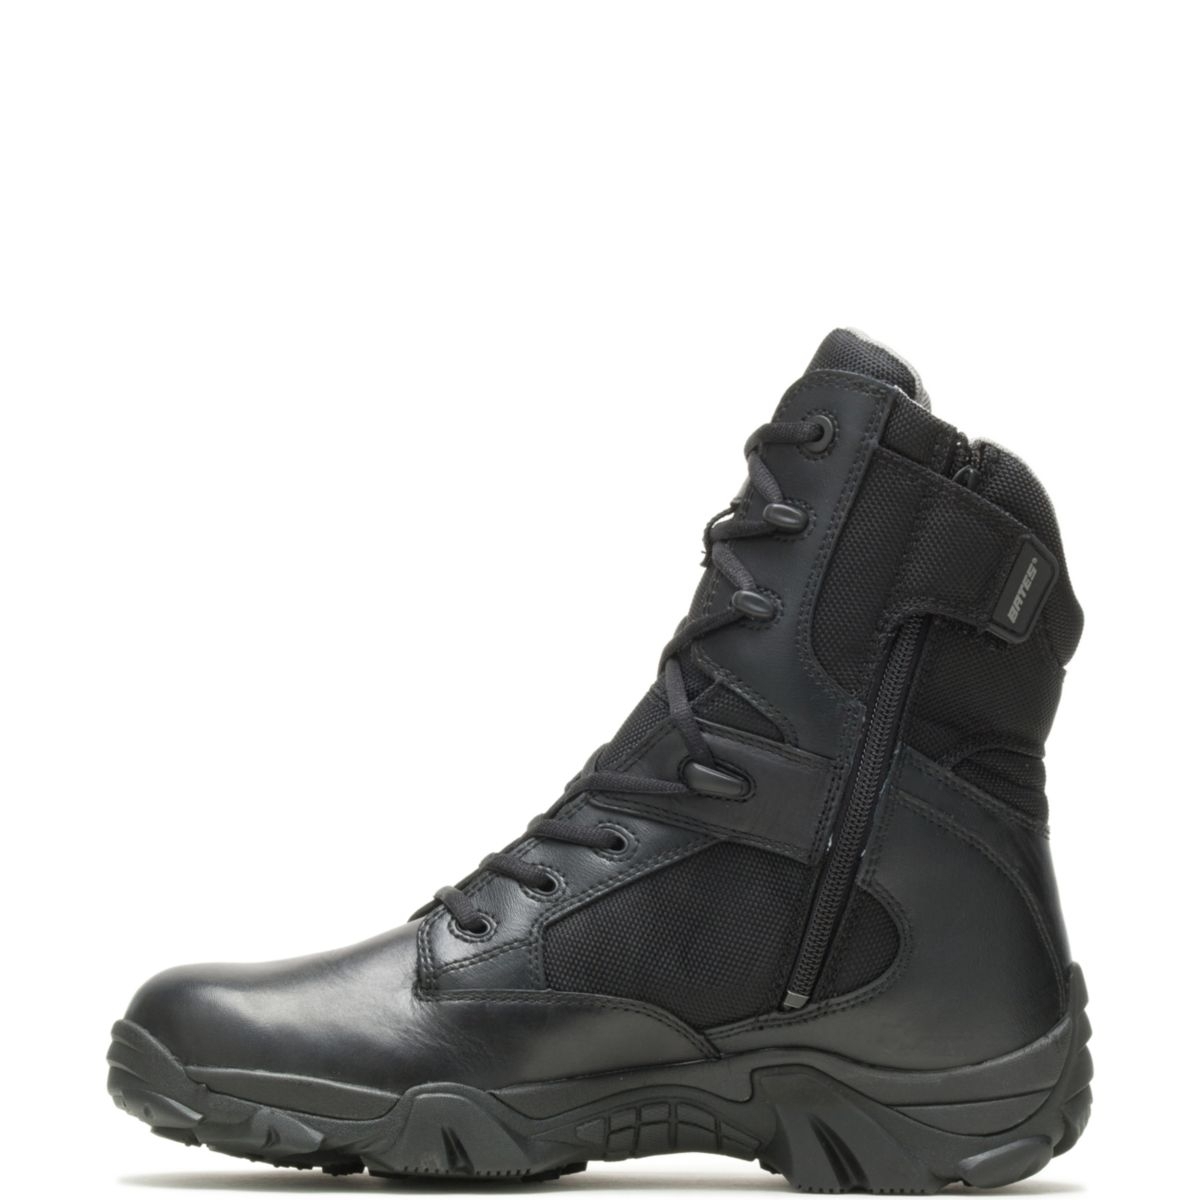 Bates Men's GX-8 Side-Zip GORE-TEXÂ® Waterproof Boot Black - E02268 BLACK - BLACK, 13-EW